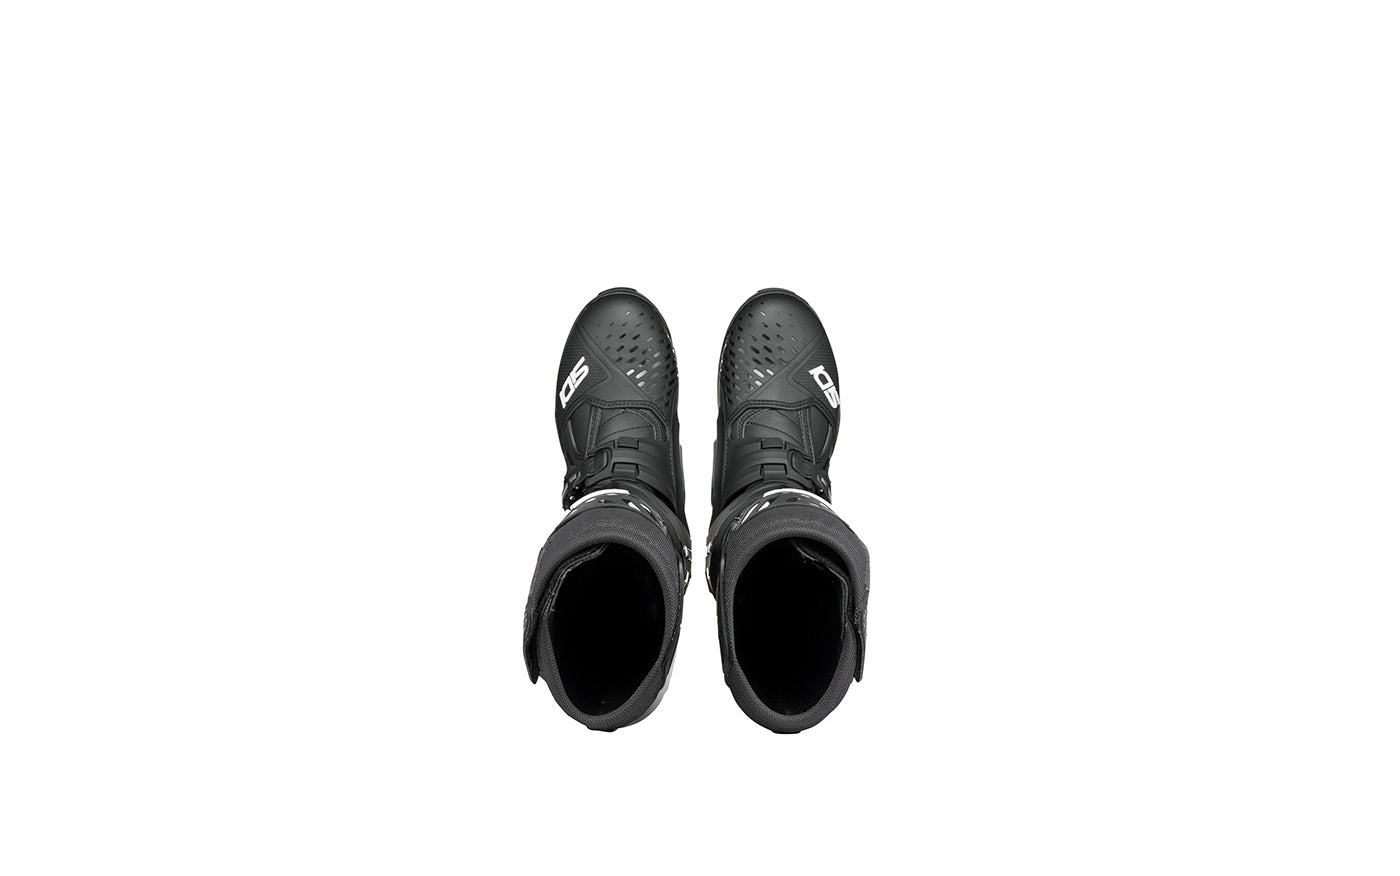 SIDI Crossair Black/Black Boots